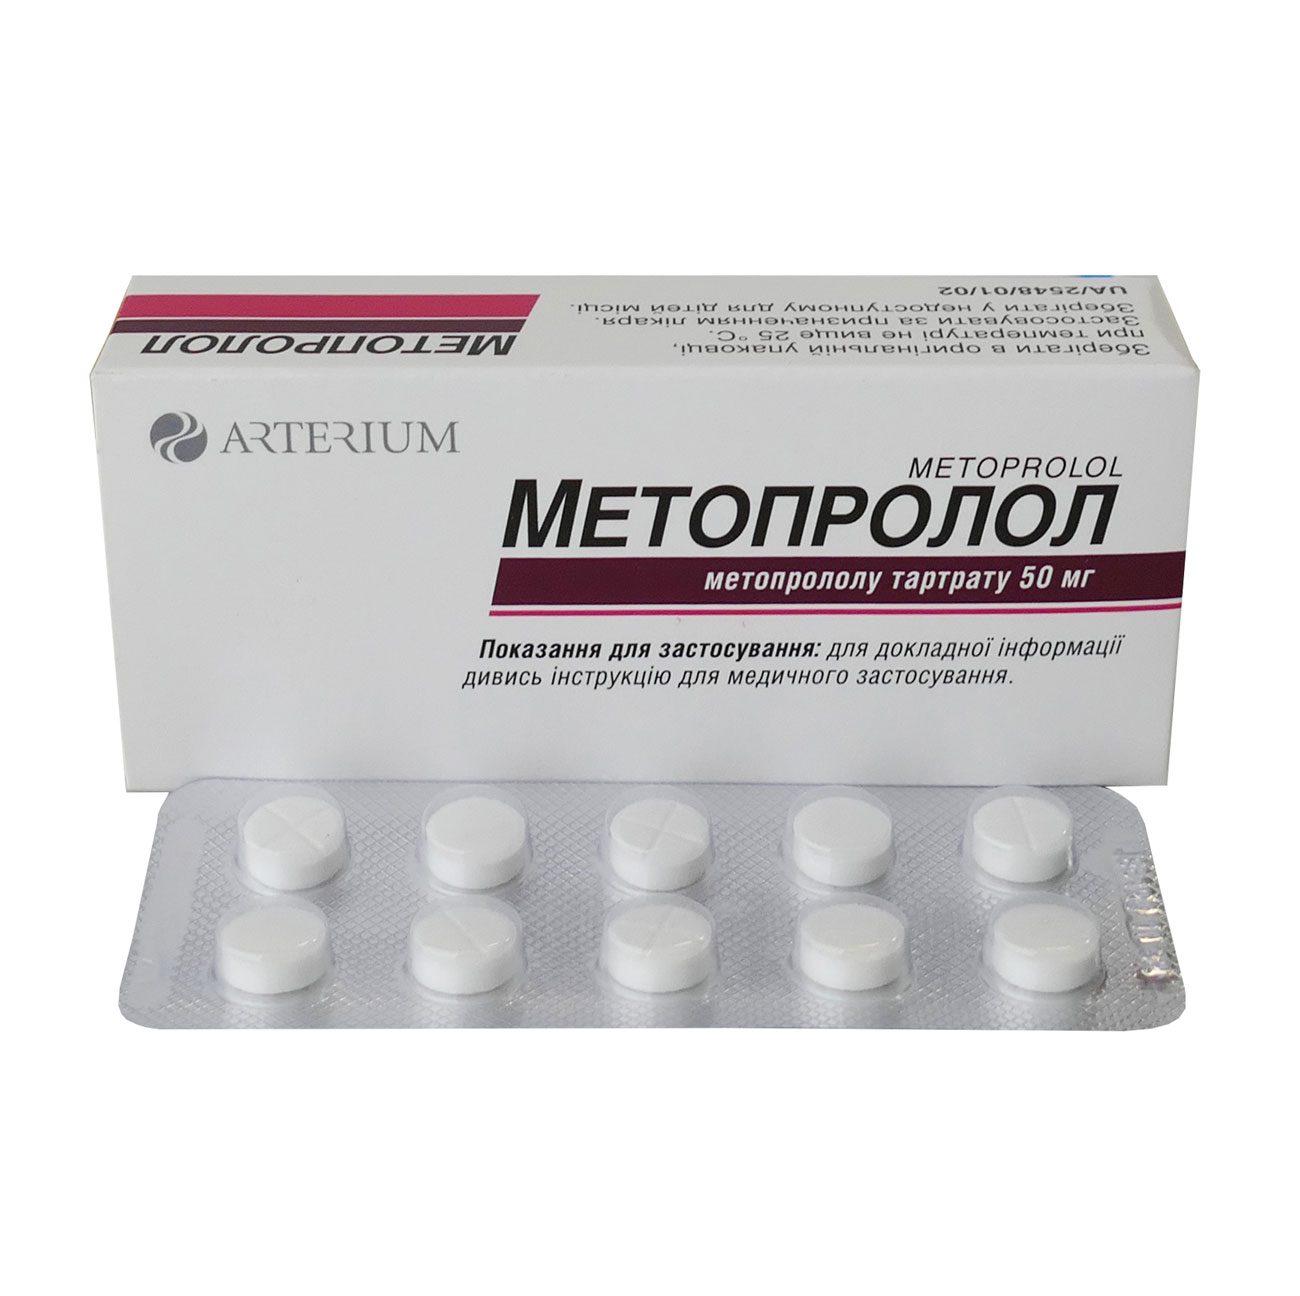 Метопролол группа препарата. Метопролол 100 мг. Метопролол 2.5 мг. Метопролол 50 мг. Метопролол 10 мг.